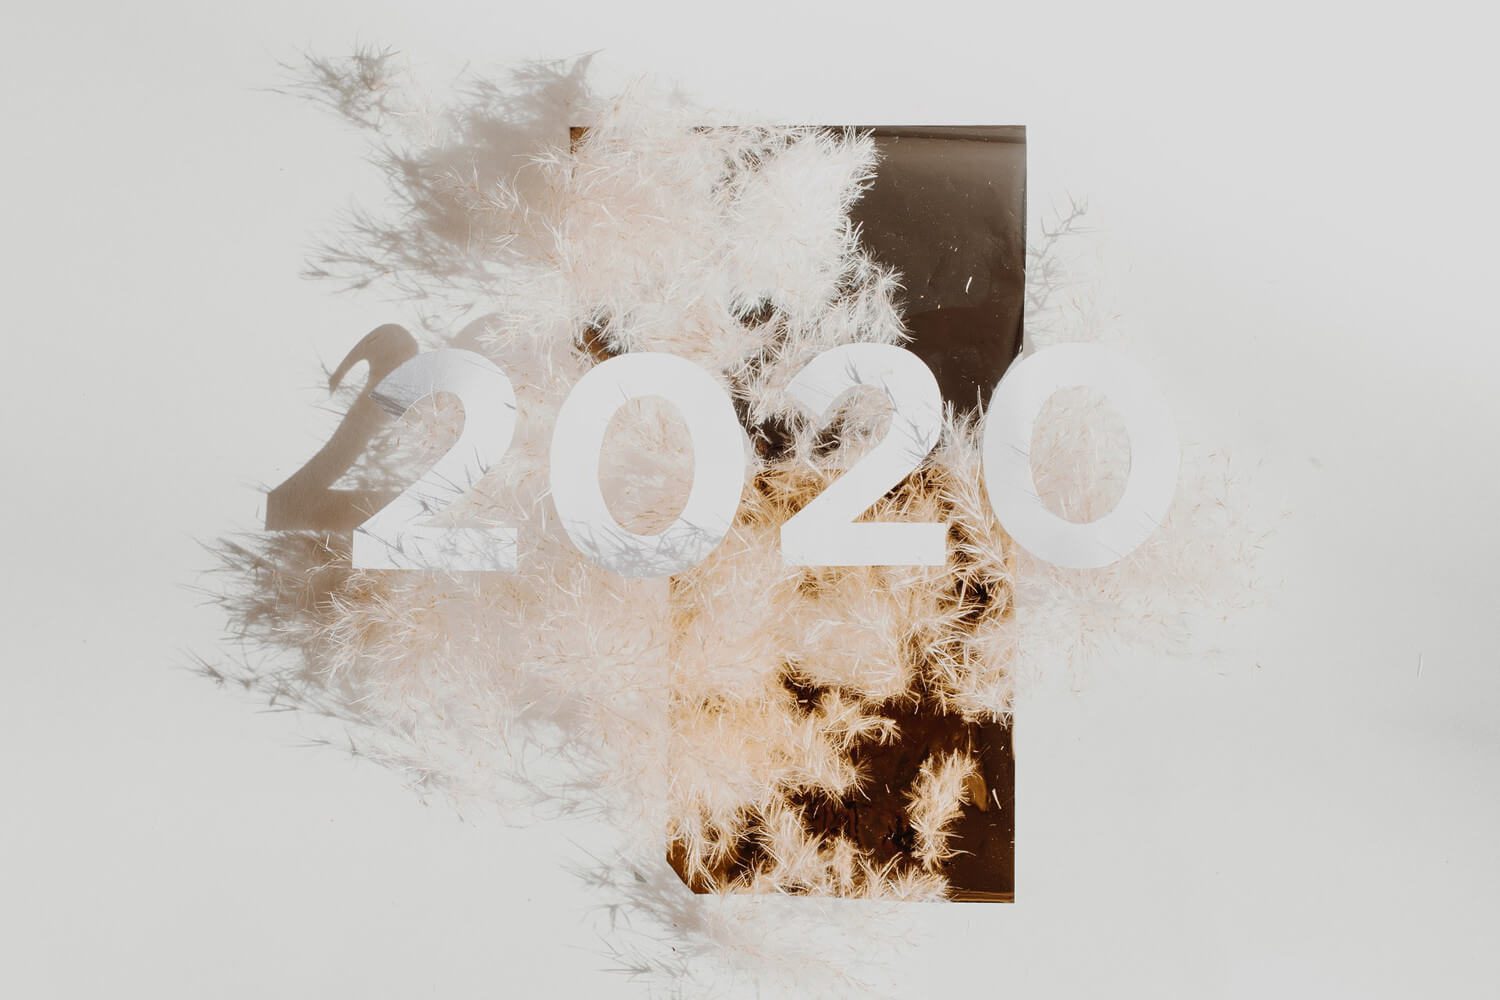 new-year-2020